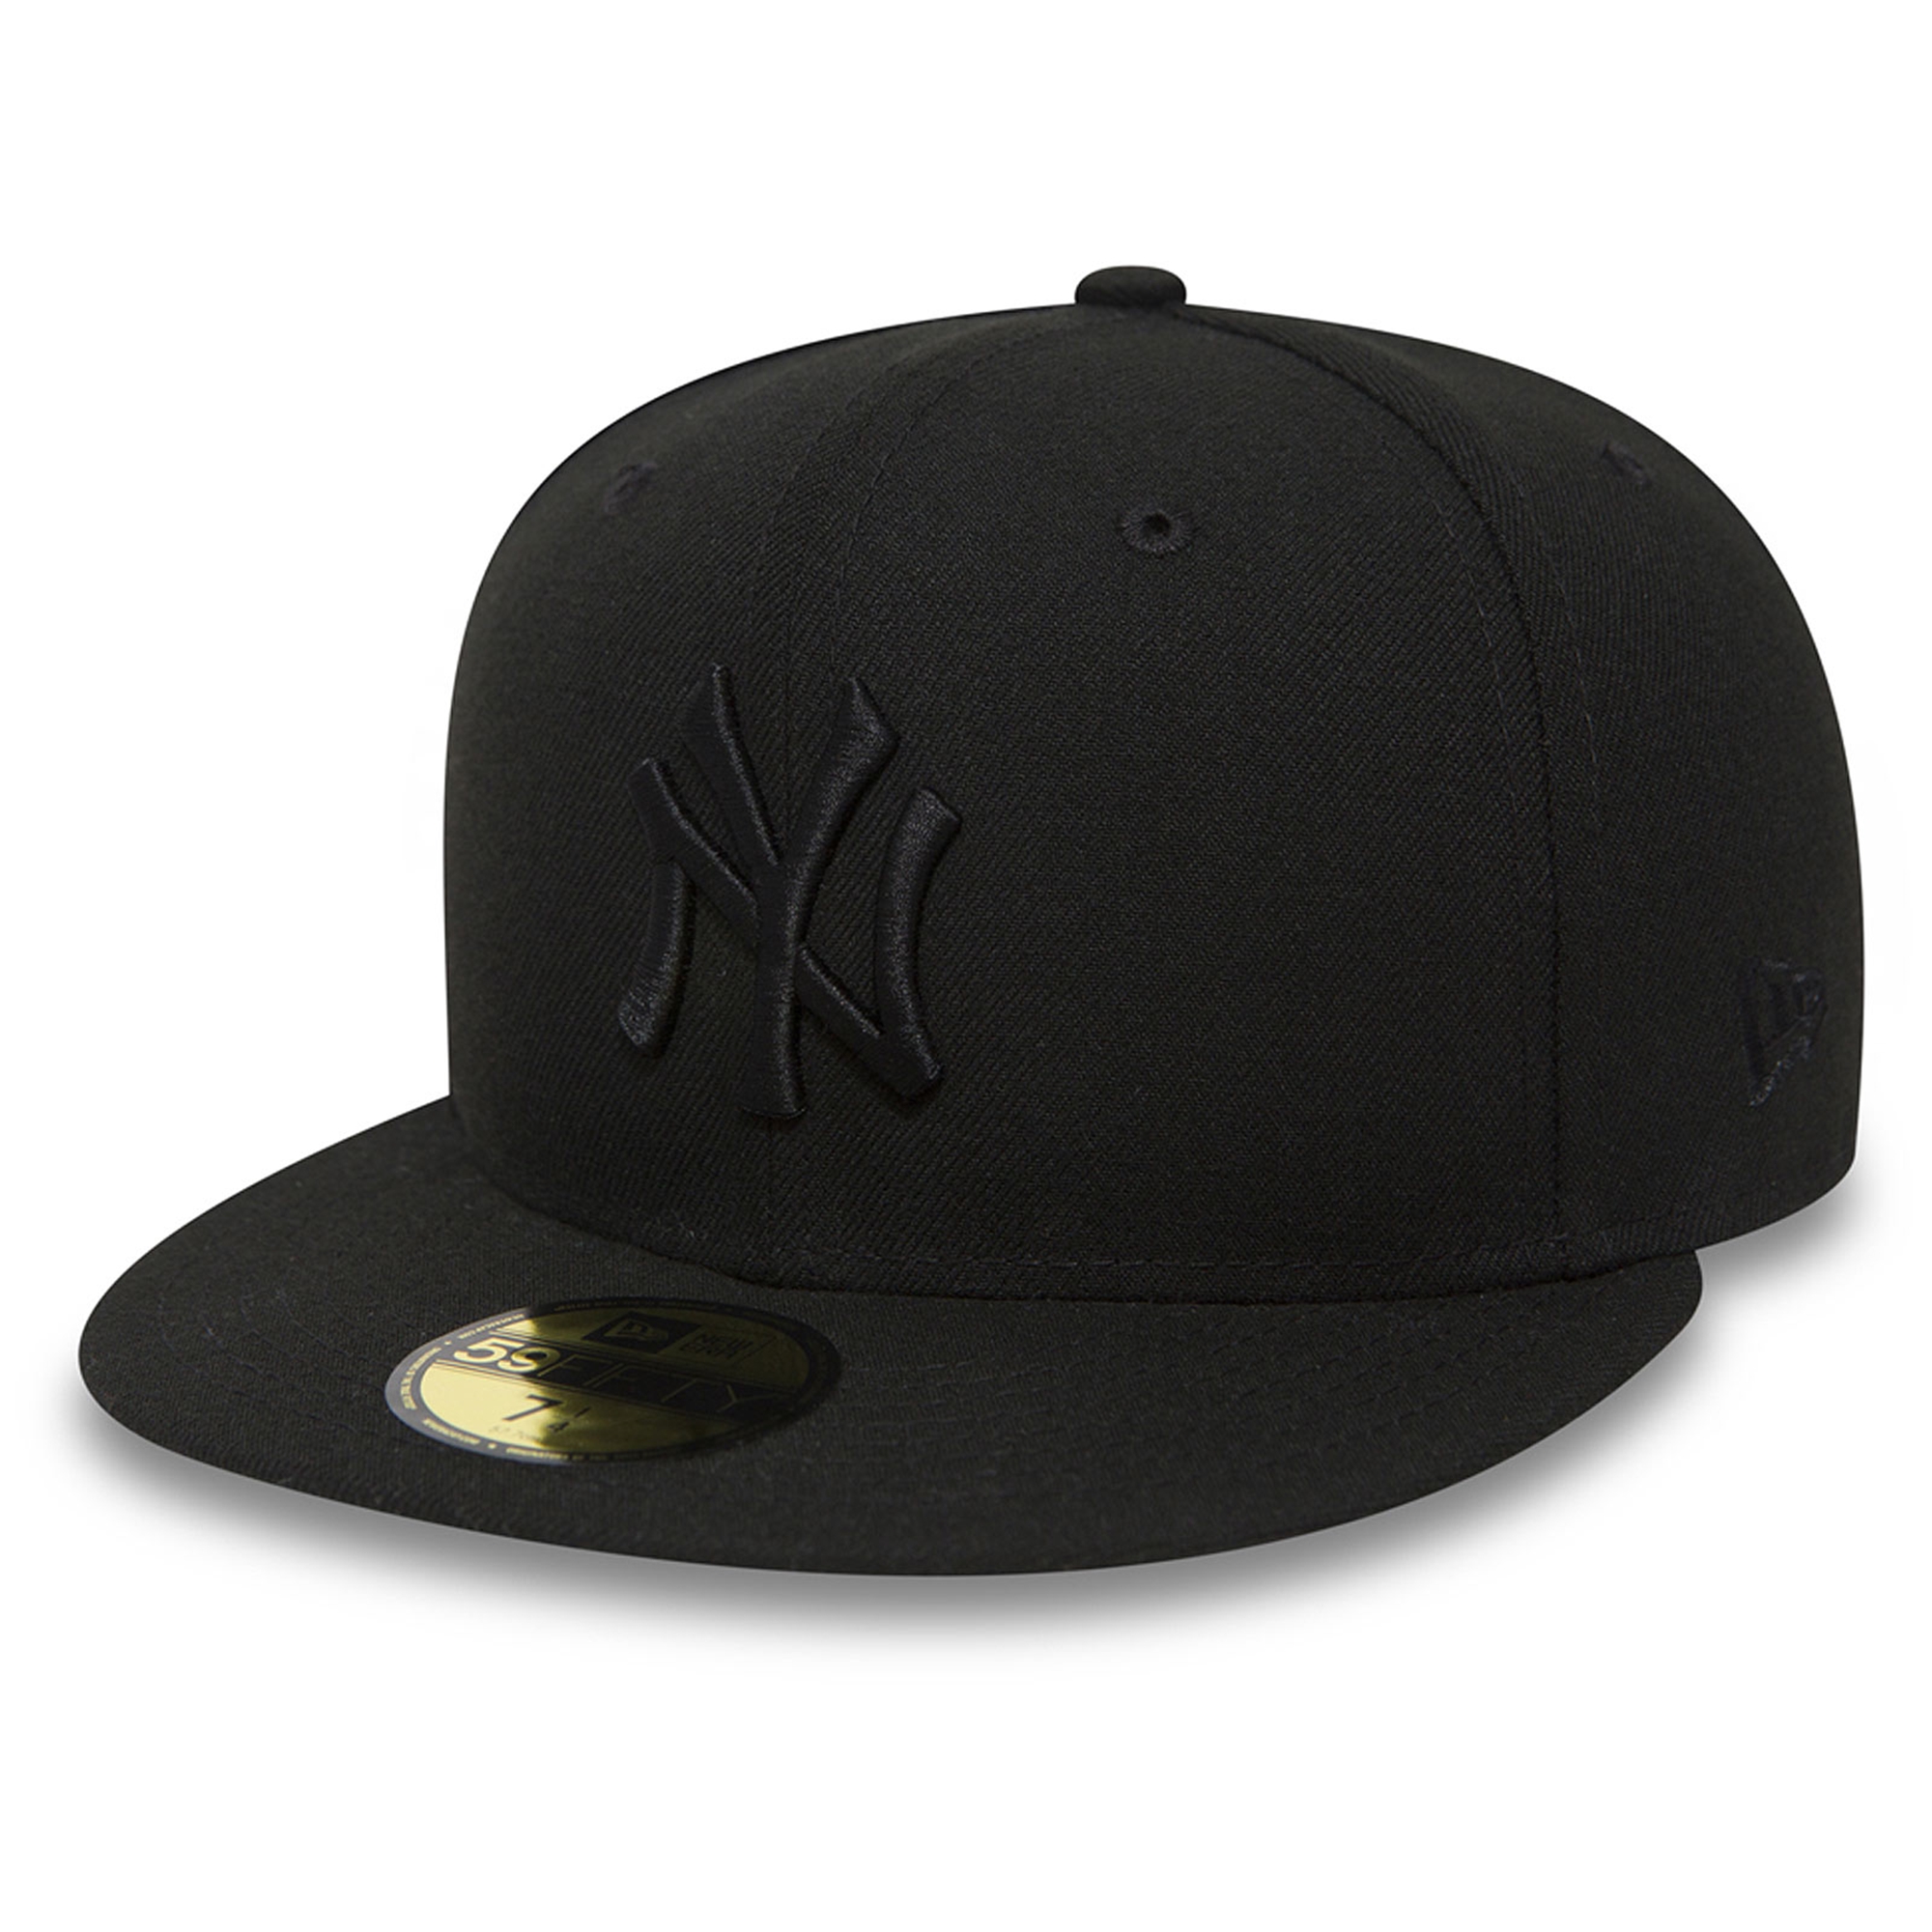 New Era 59Fifty | Basecap York Cap MLB Yankees Baseball eBay Cap Fitted New